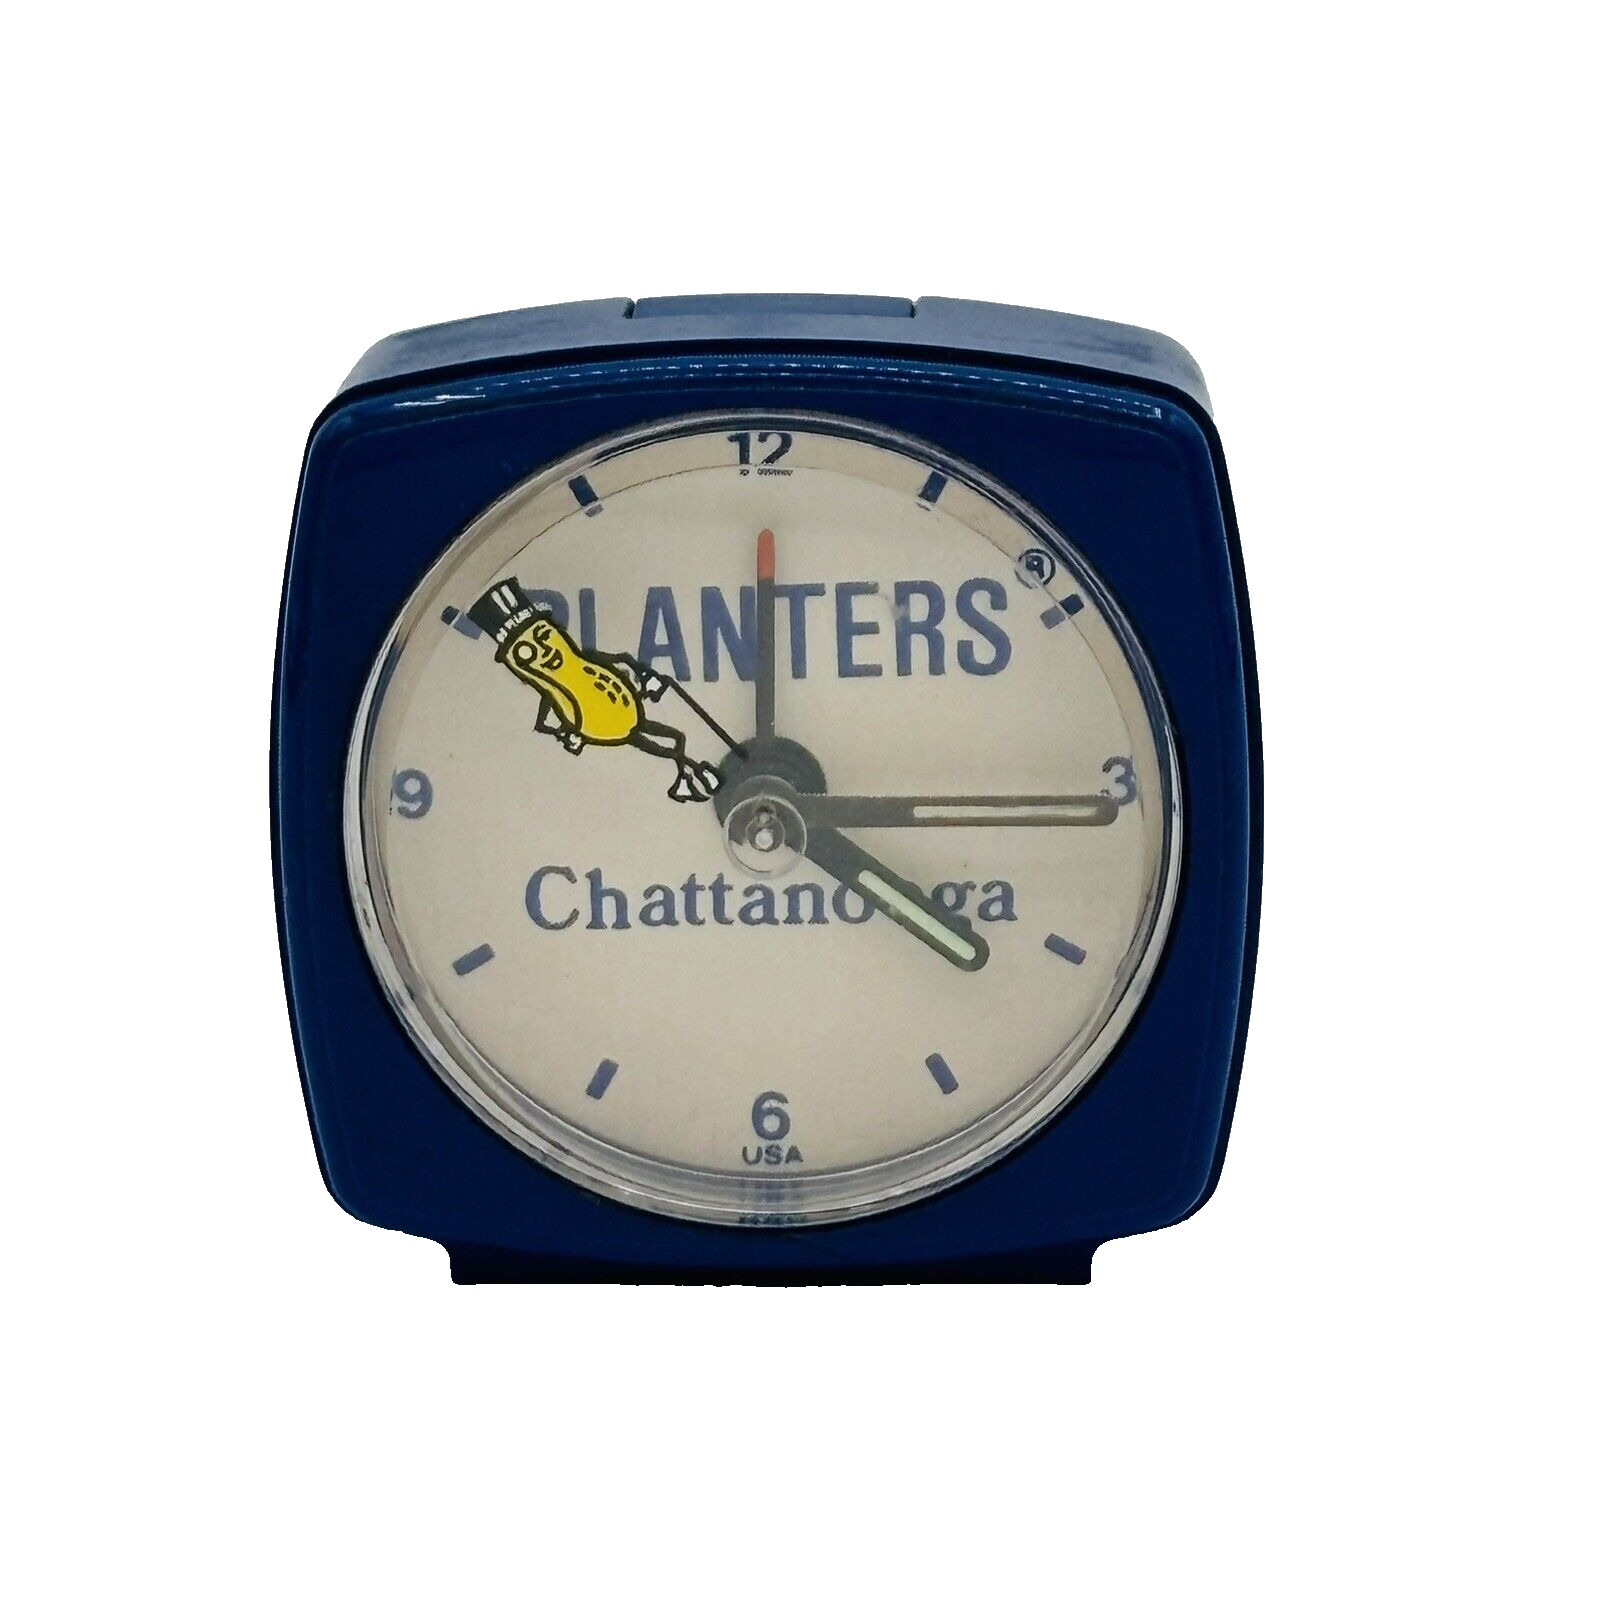 Vtg Planters Chattanooga Tennessee Mr. Peanut Snacks Desk Clock - Works *READ*